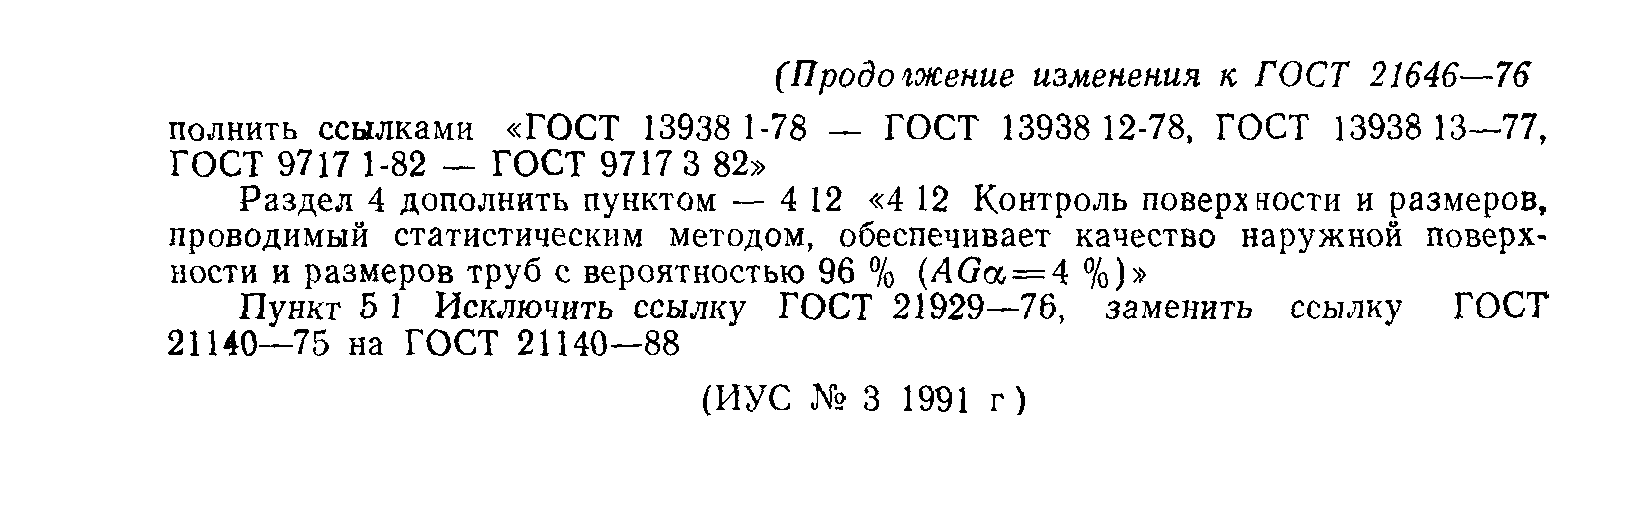 ГОСТ 21646-76